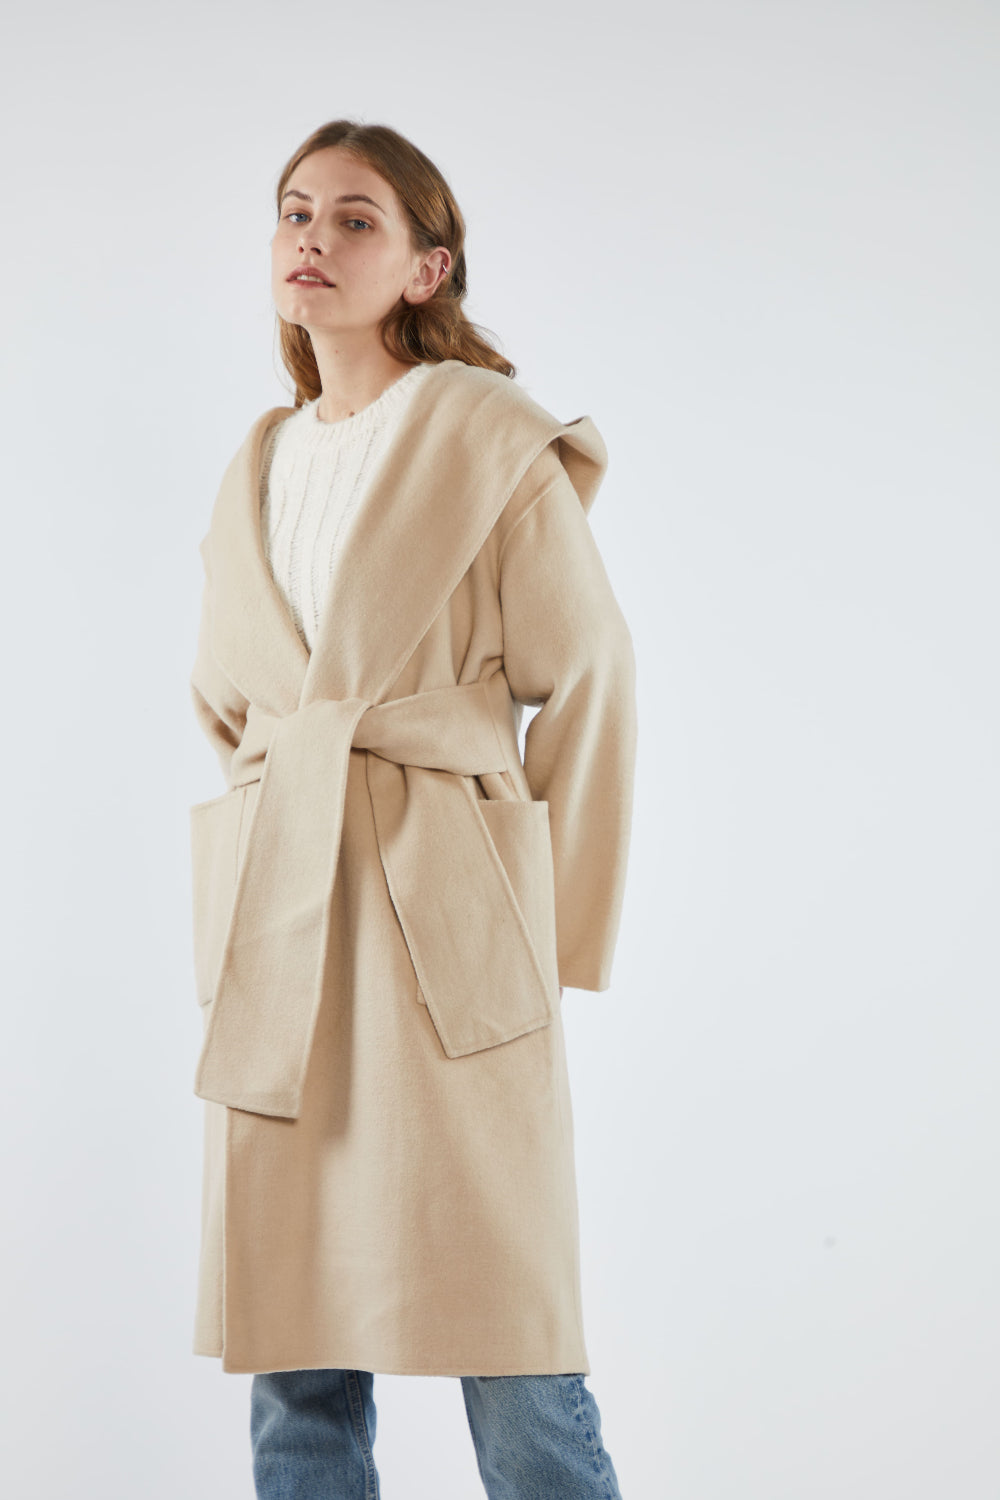 Lara - Hooded Coat with Wide Waist Belt - By Quaint